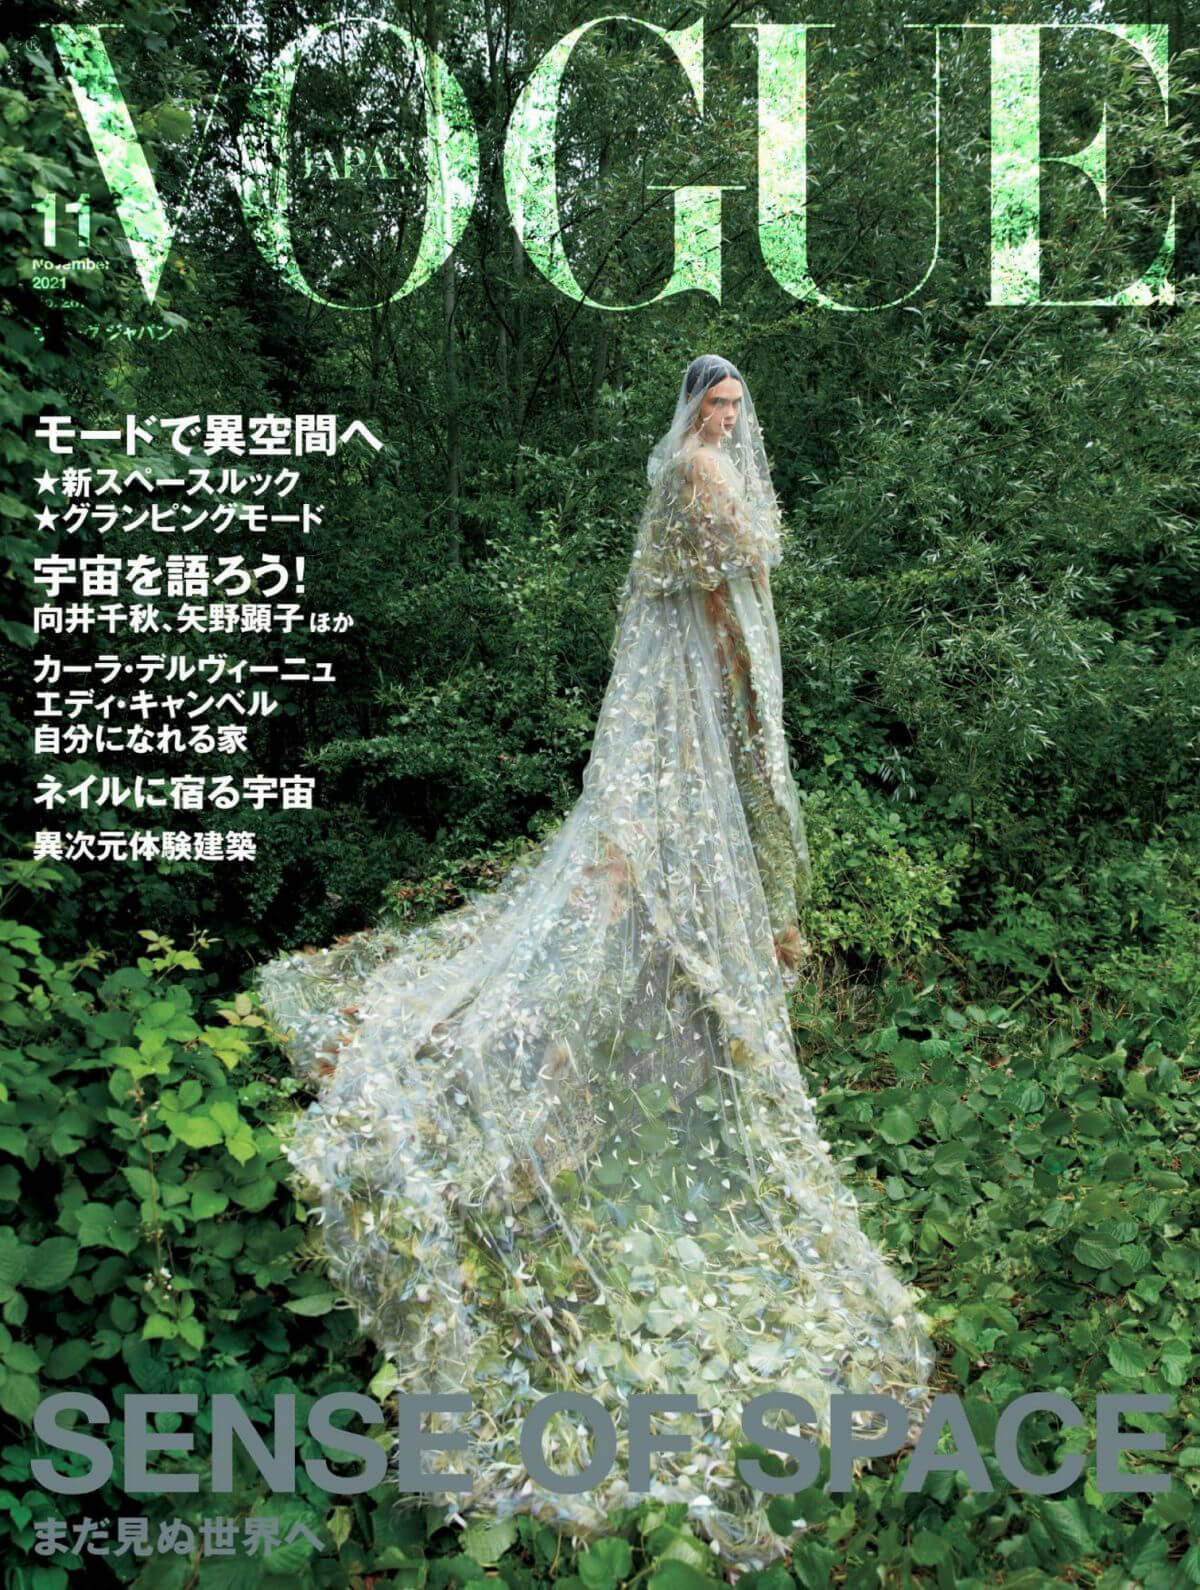 Cara Delevingne Photoshoot for Vogue Magazine, Japan October 2021 8